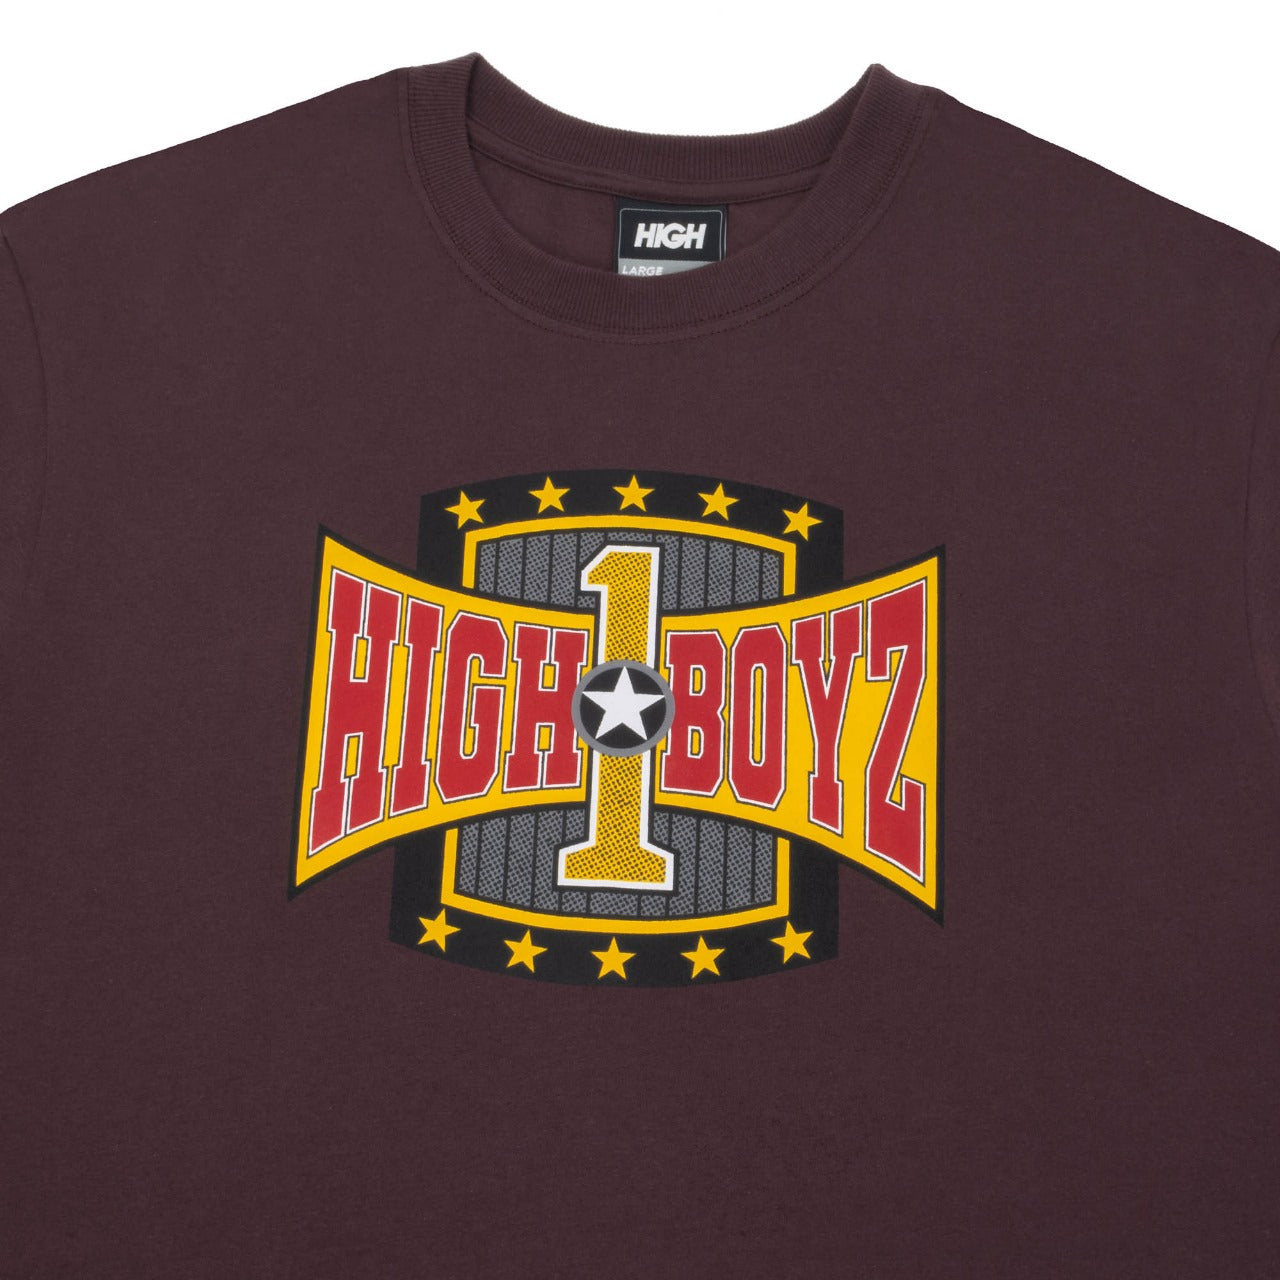 Camiseta High The Champion Brown (8127756730584)